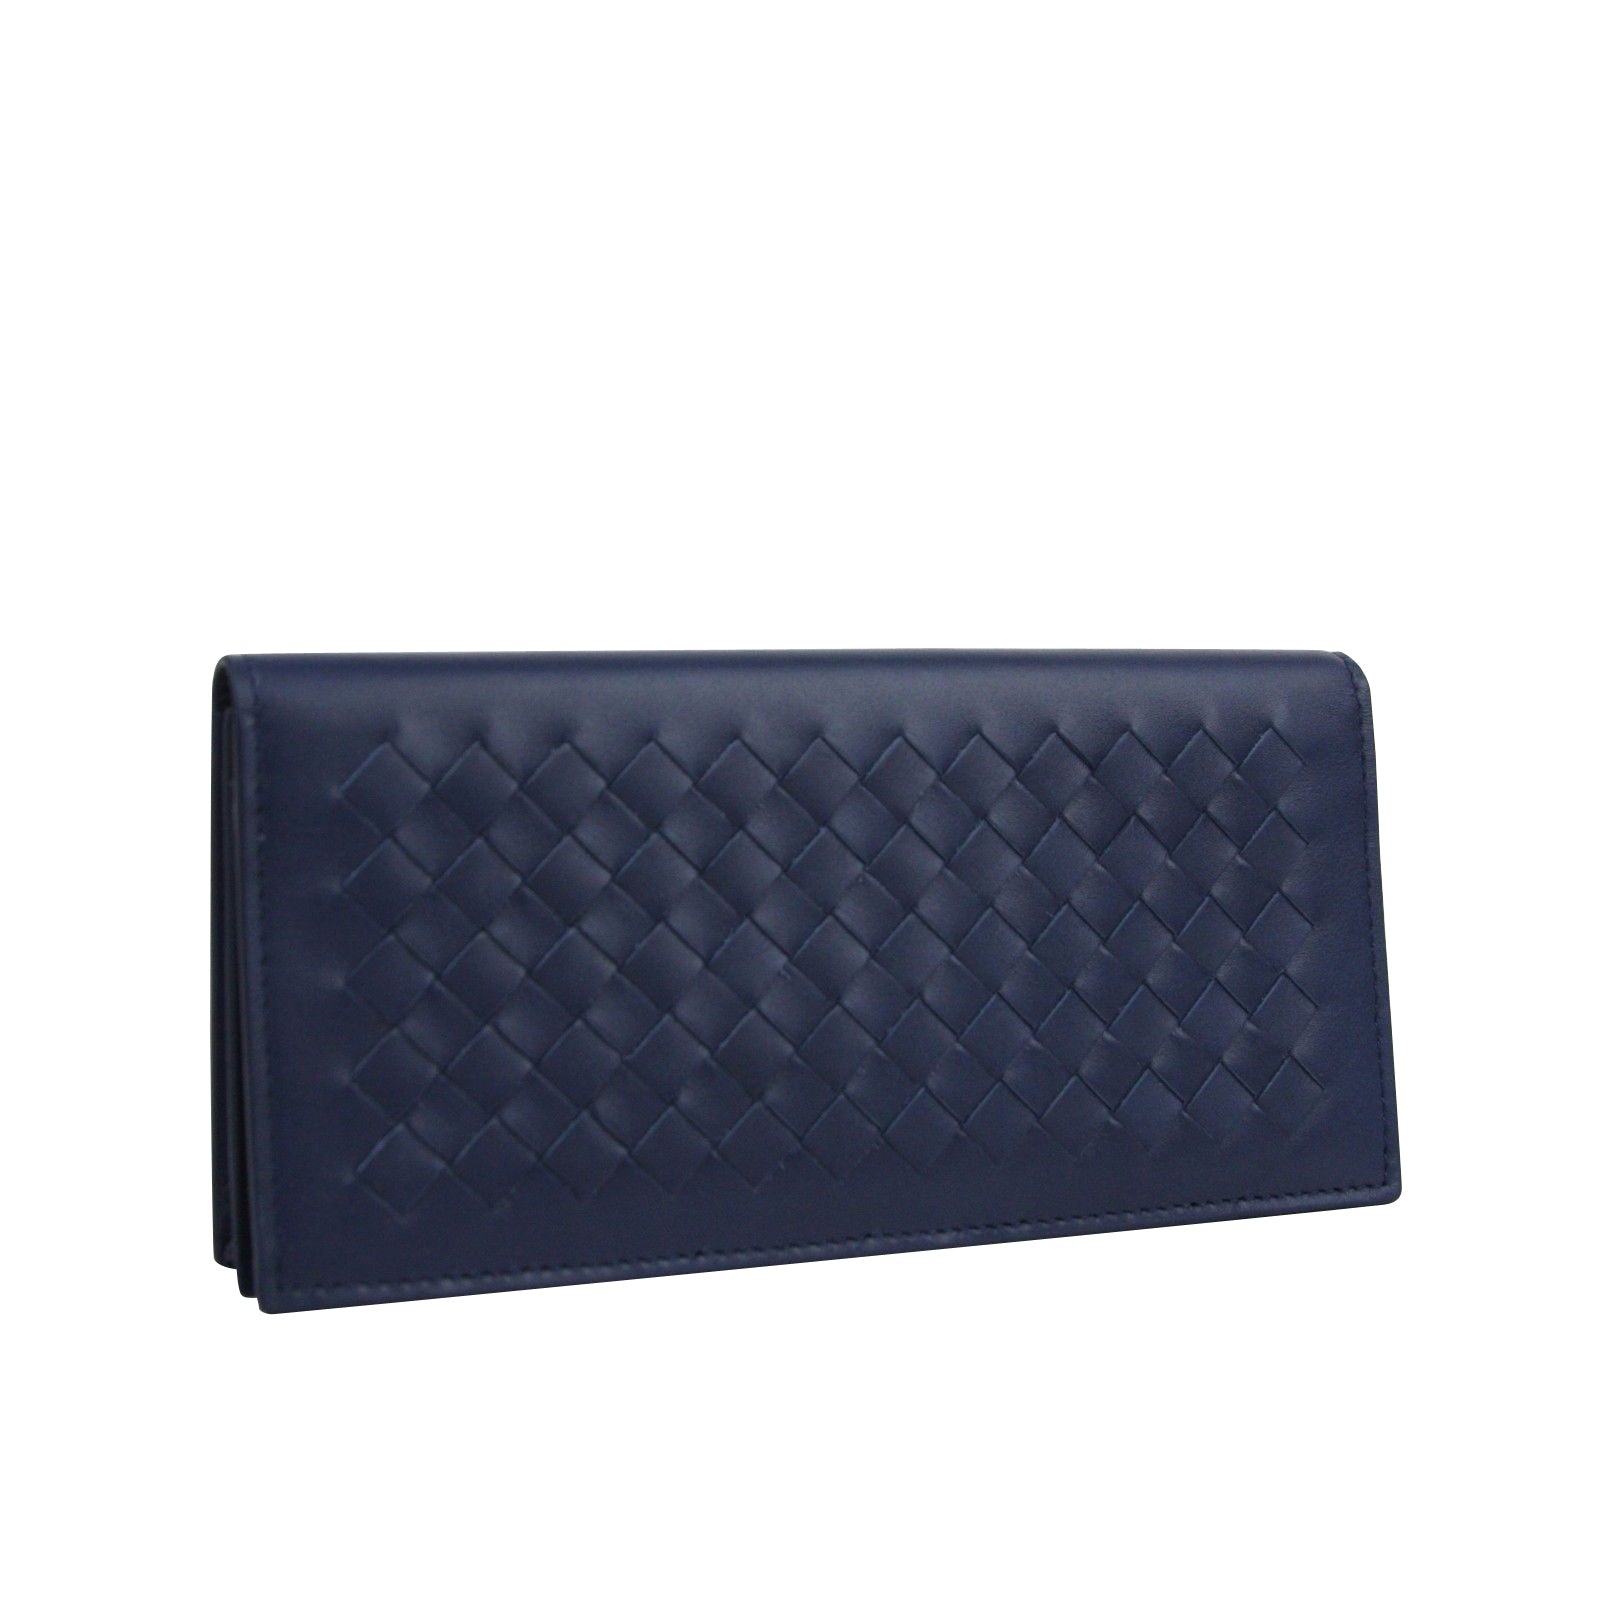 Bottega Veneta Men's Intercciaco Navy Blue Leather Wallet